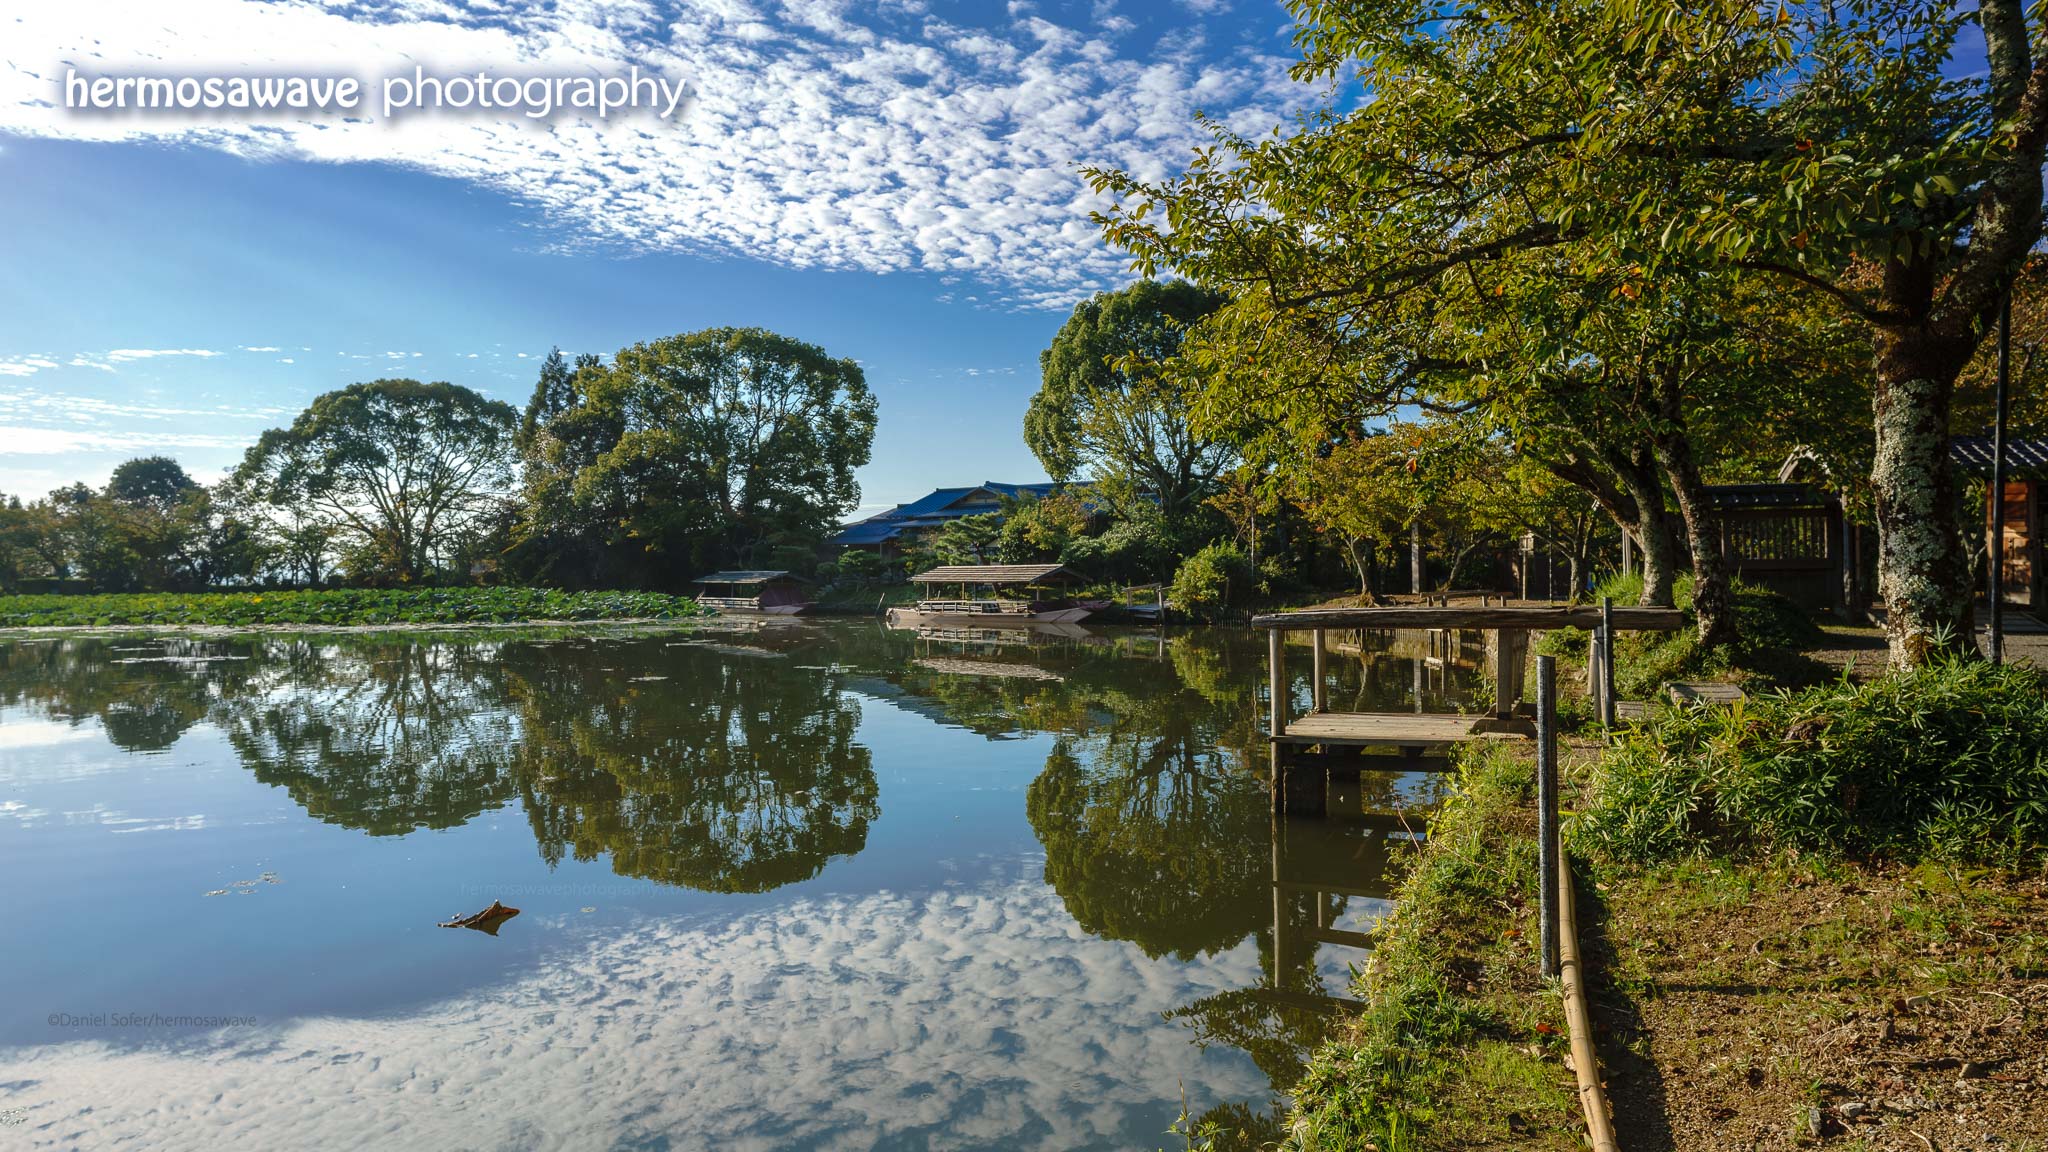 Morning at Osawa Ike Pond